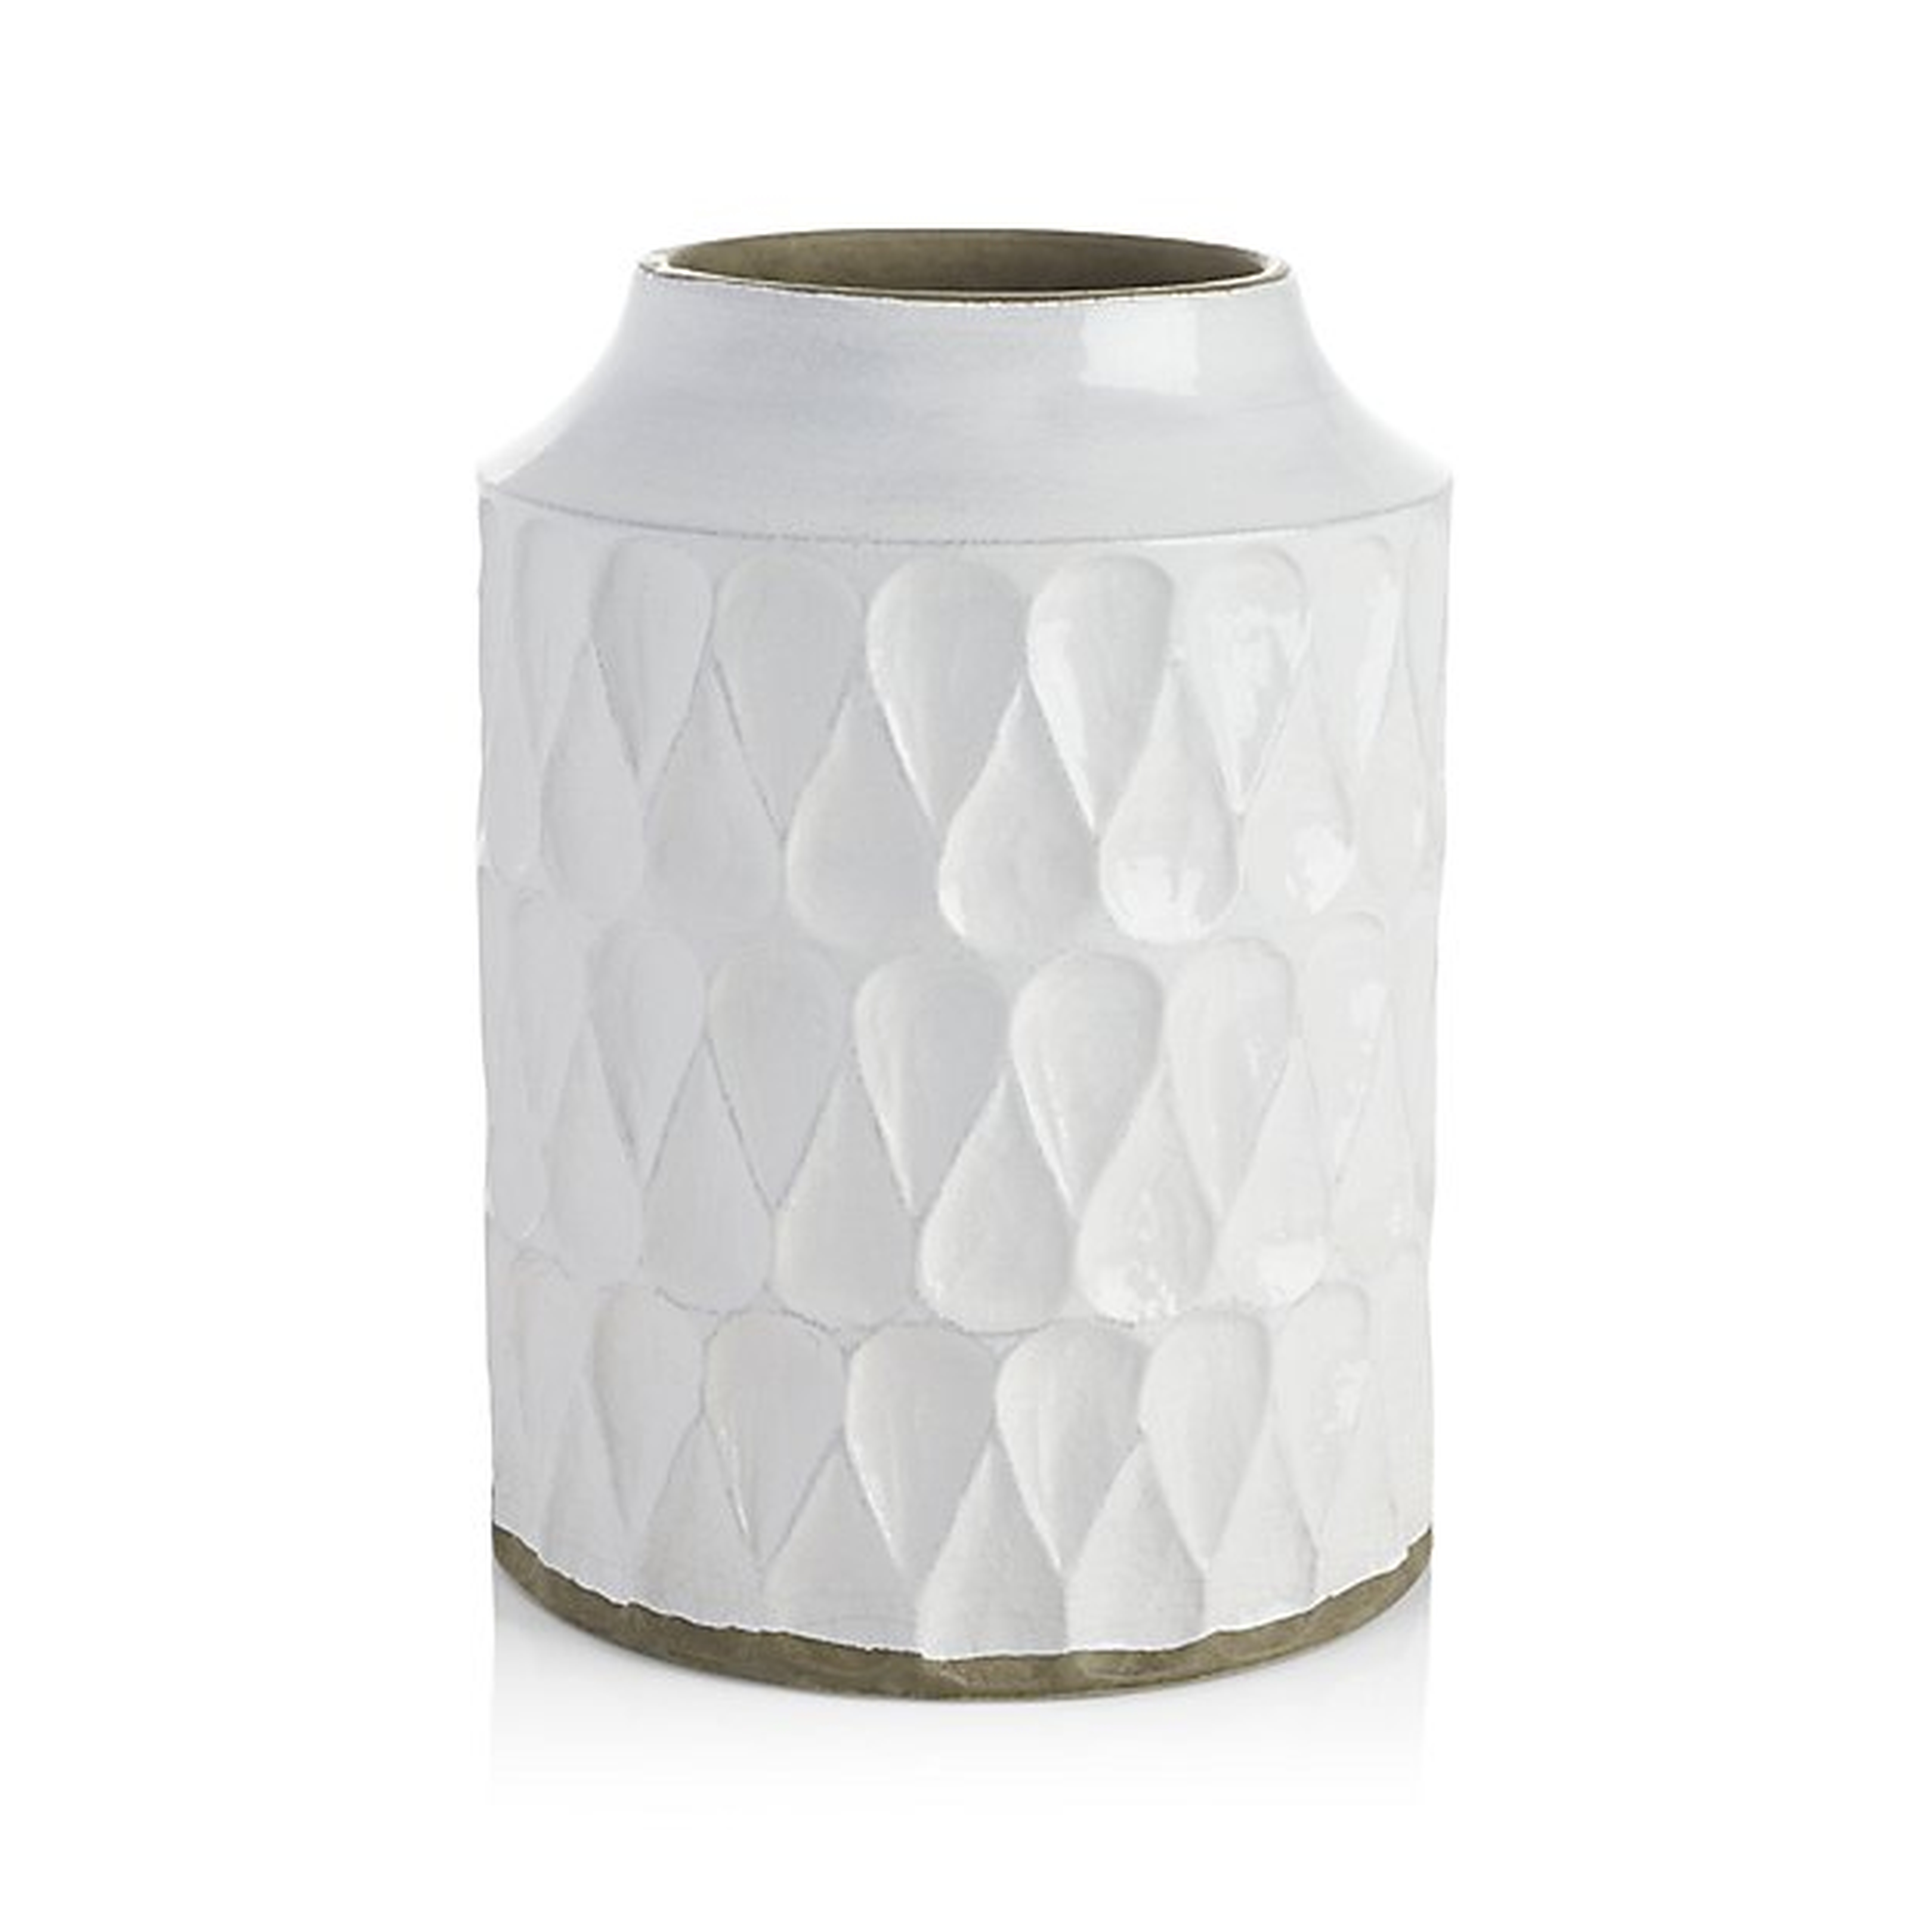 Kora Small Vase - Crate and Barrel